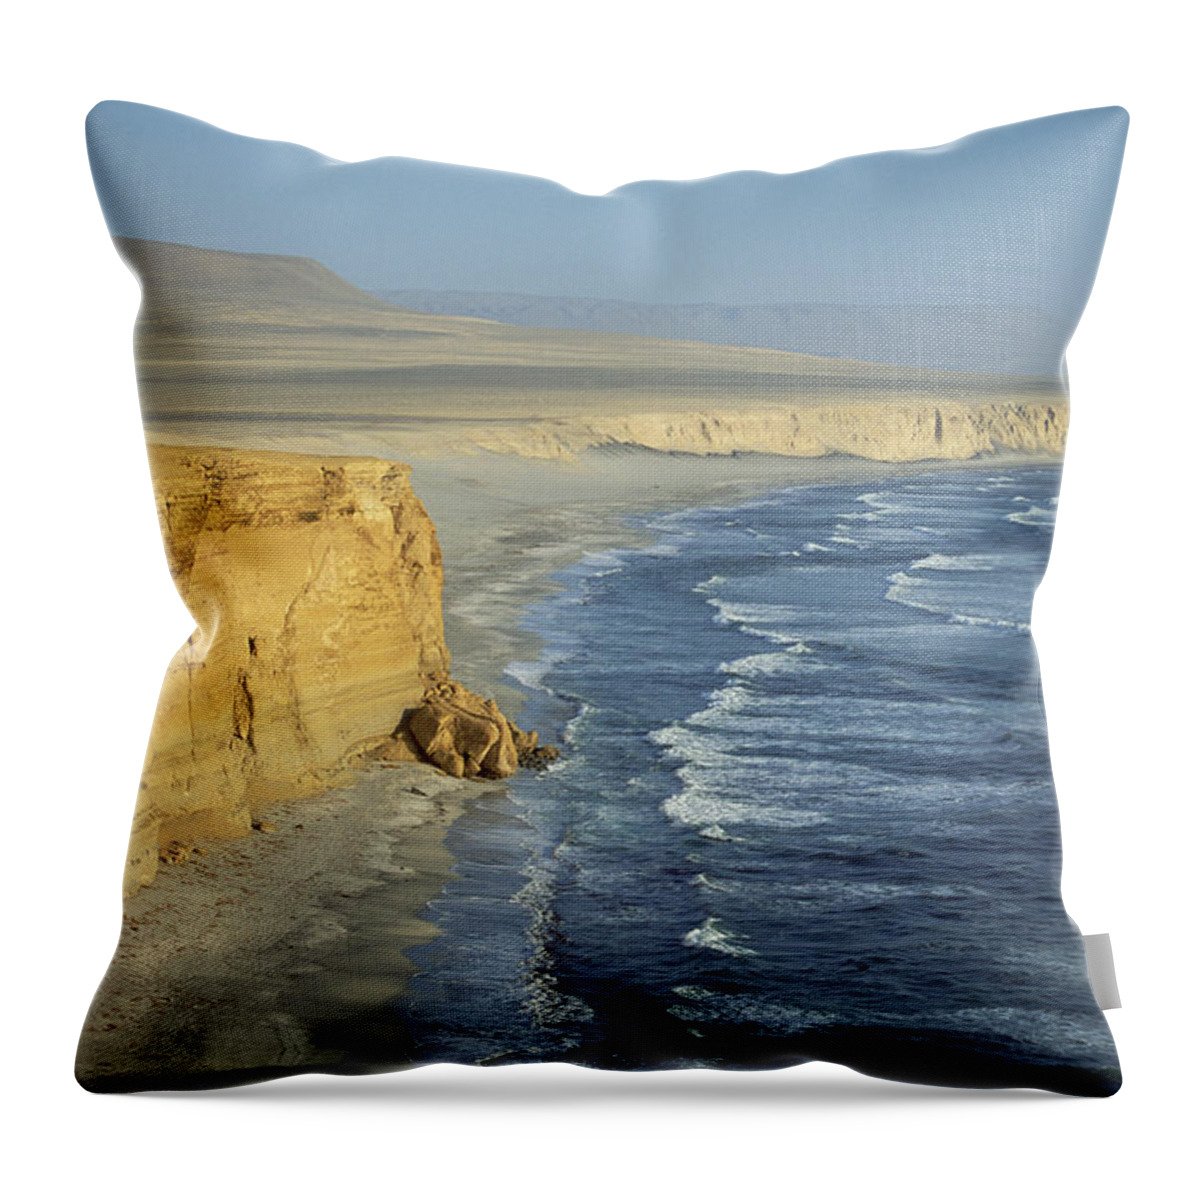 Feb0514 Throw Pillow featuring the photograph Atacama Desert Cliffs And The Pacific #1 by Tui De Roy